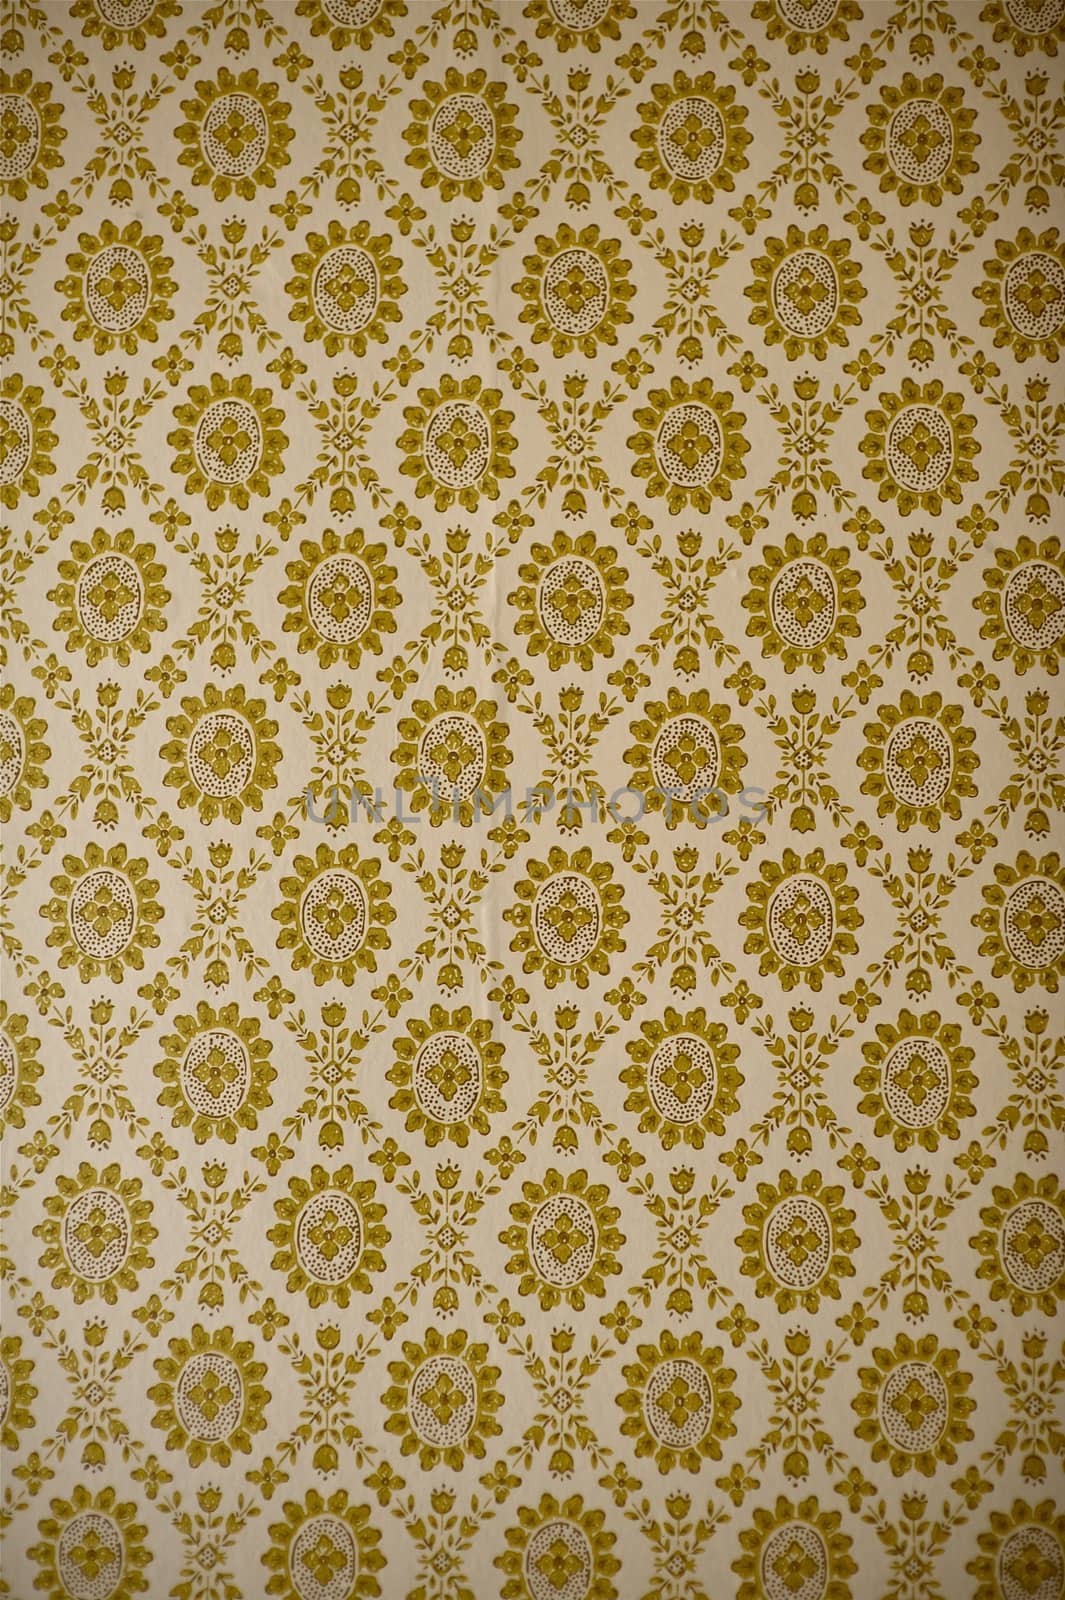 Vintage Floral Wallpaper Vertical Photo. Simple Retro Style Pattern.